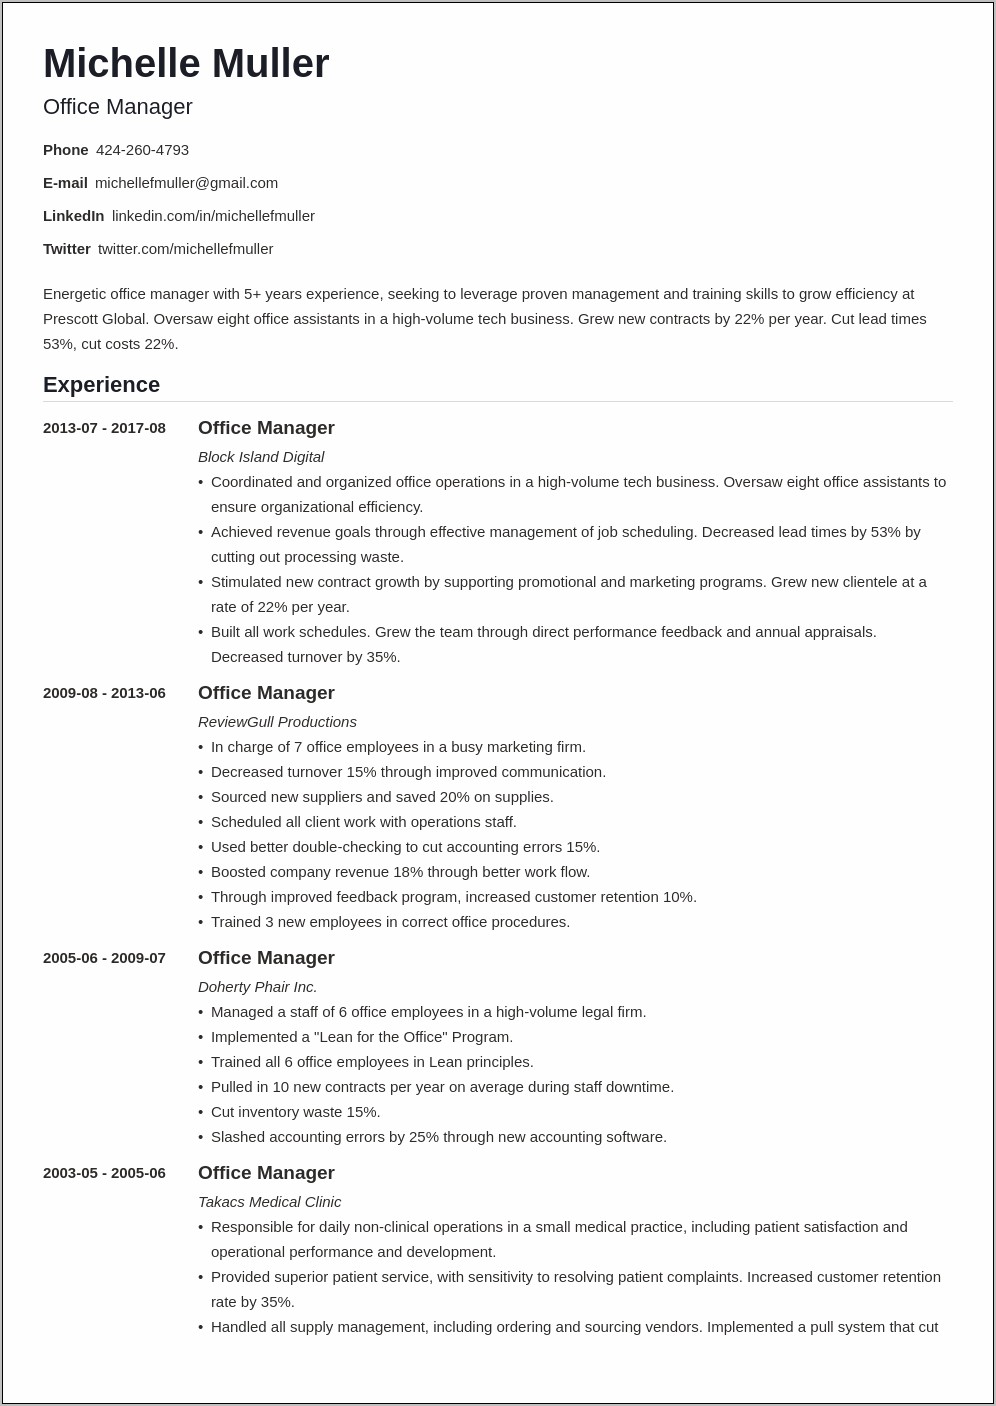 Resume 2 Job Titles Same Company